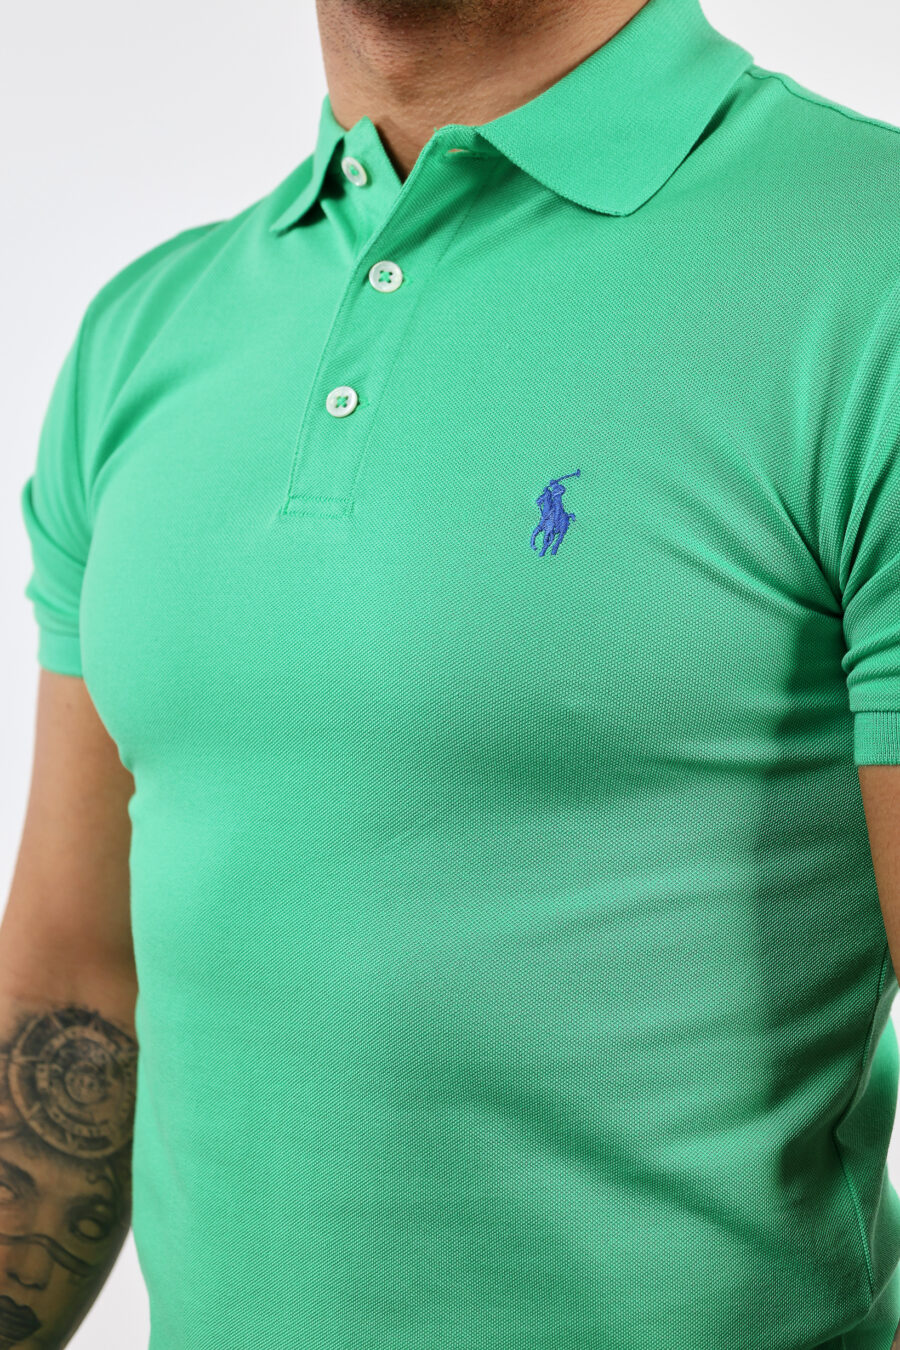 T-shirt vert et bleu avec mini-logo "polo" - BLS Fashion 174